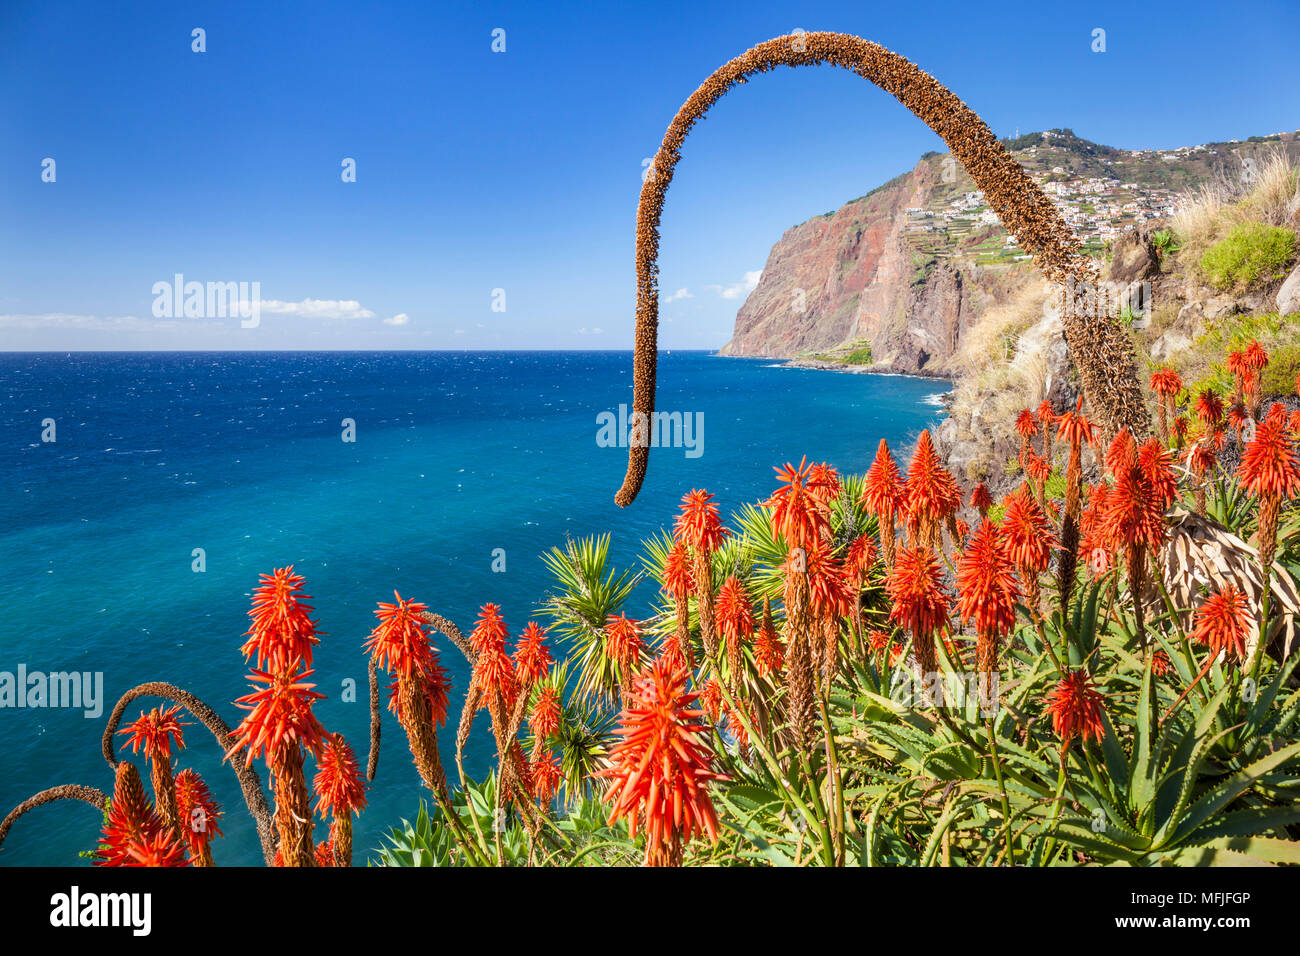 La mer falaise pointe Cabo Girao avec red Kranz aloe (Aloe arborescens) et Agave attenuata, Madeira, Portugal, Europe, Atlantique Banque D'Images